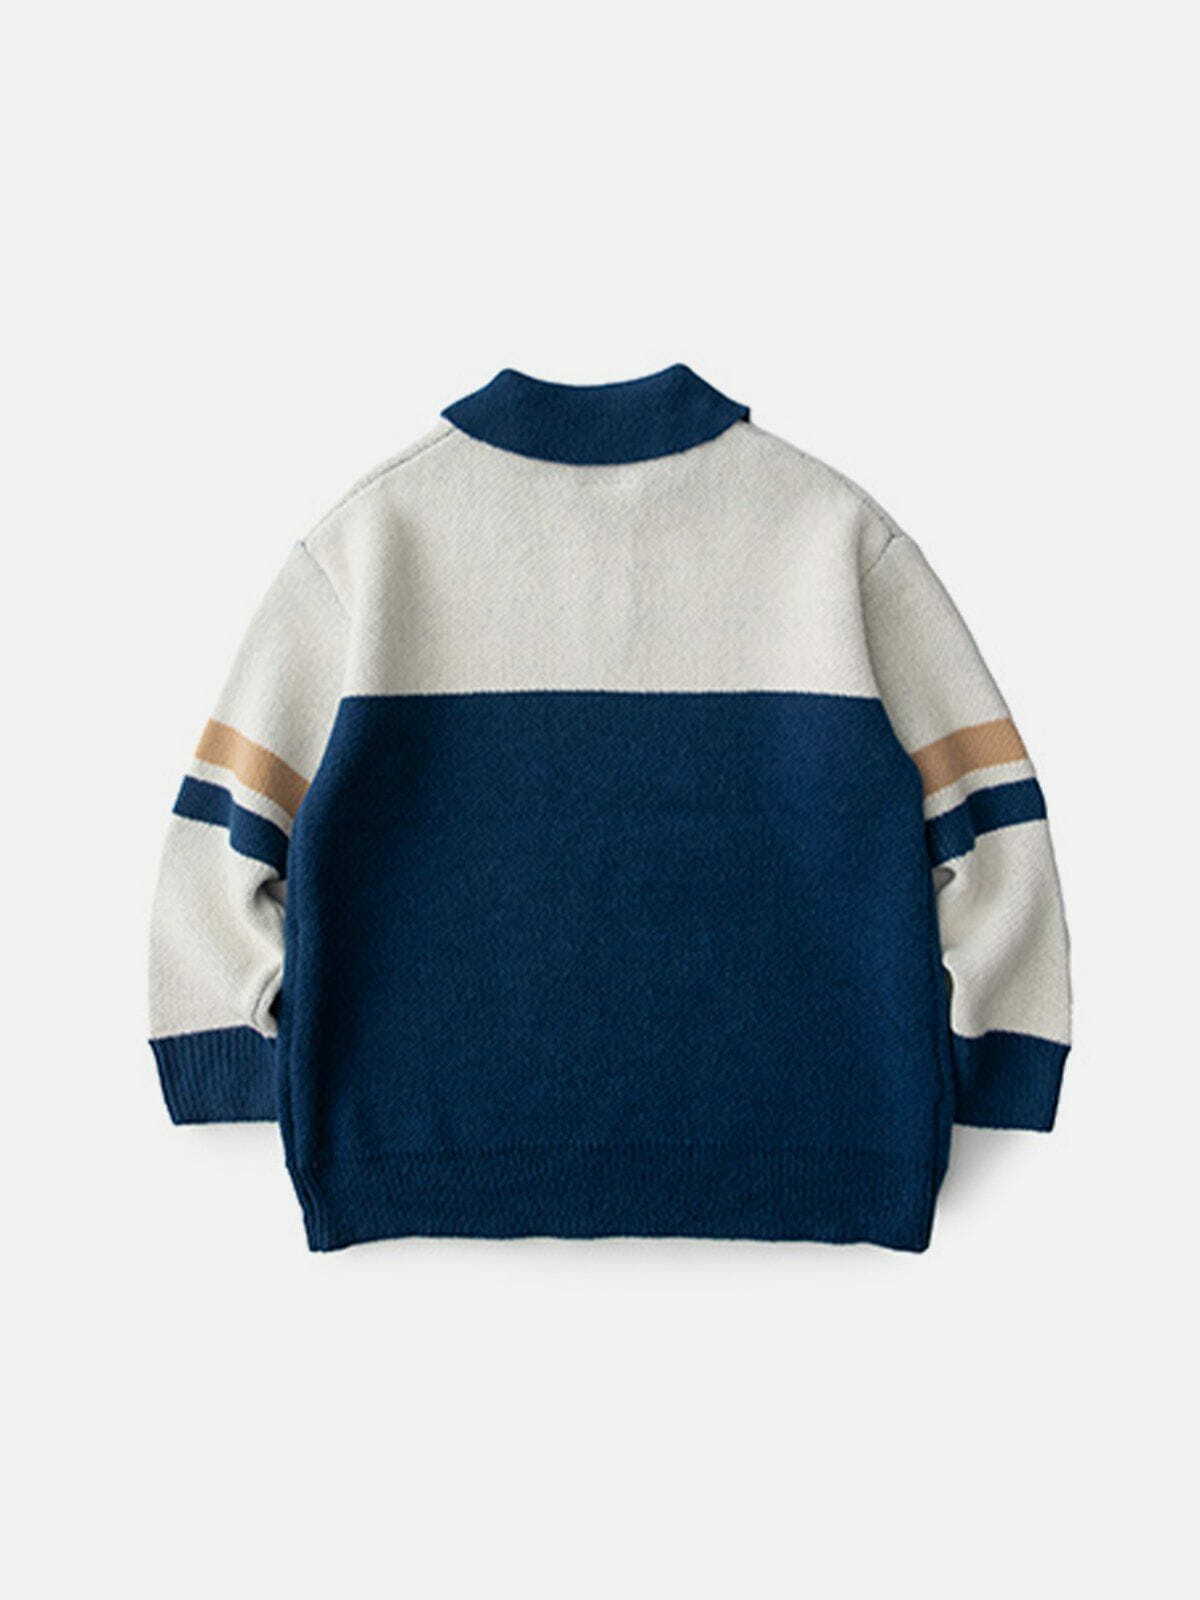 stars knit polo sweater chic streetwear staple 8702